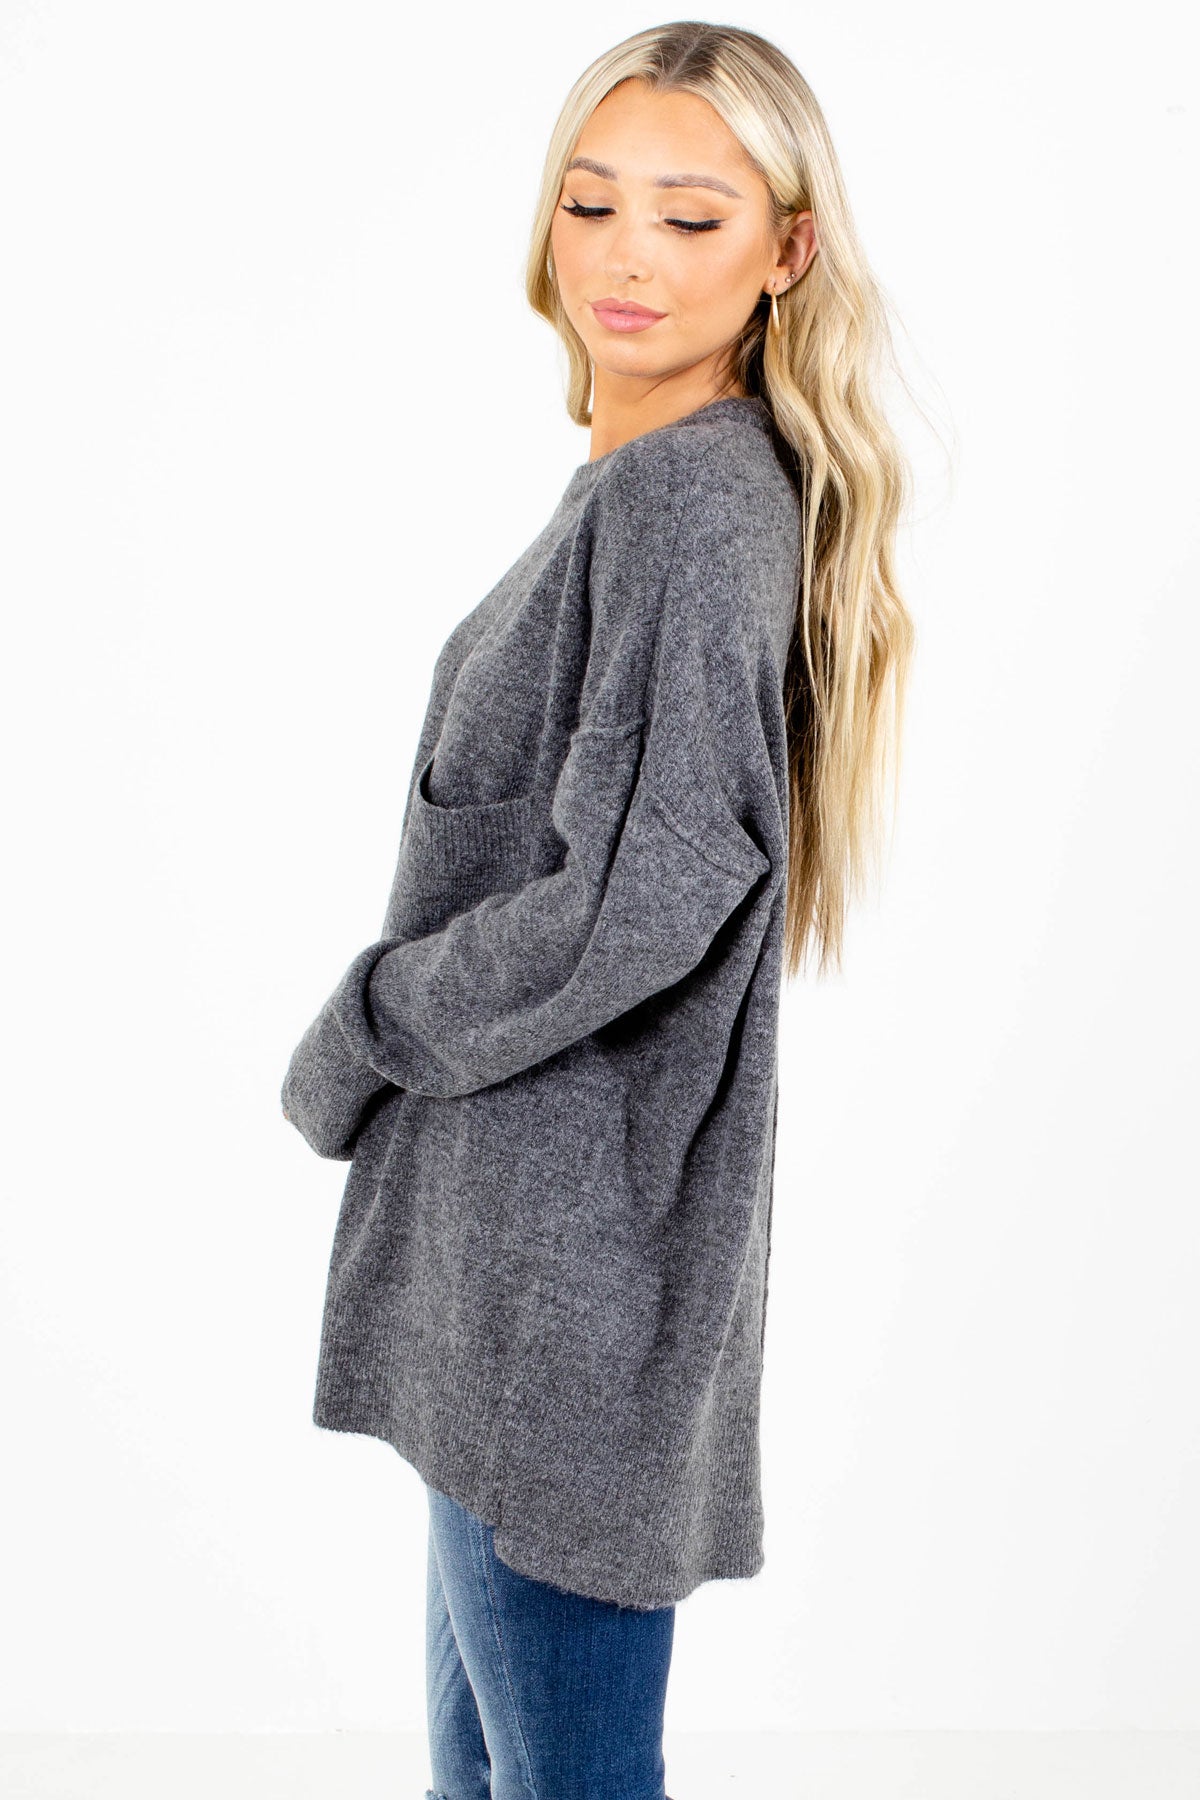 Women's Charcoal Gray High-Low Hem Boutique Sweater